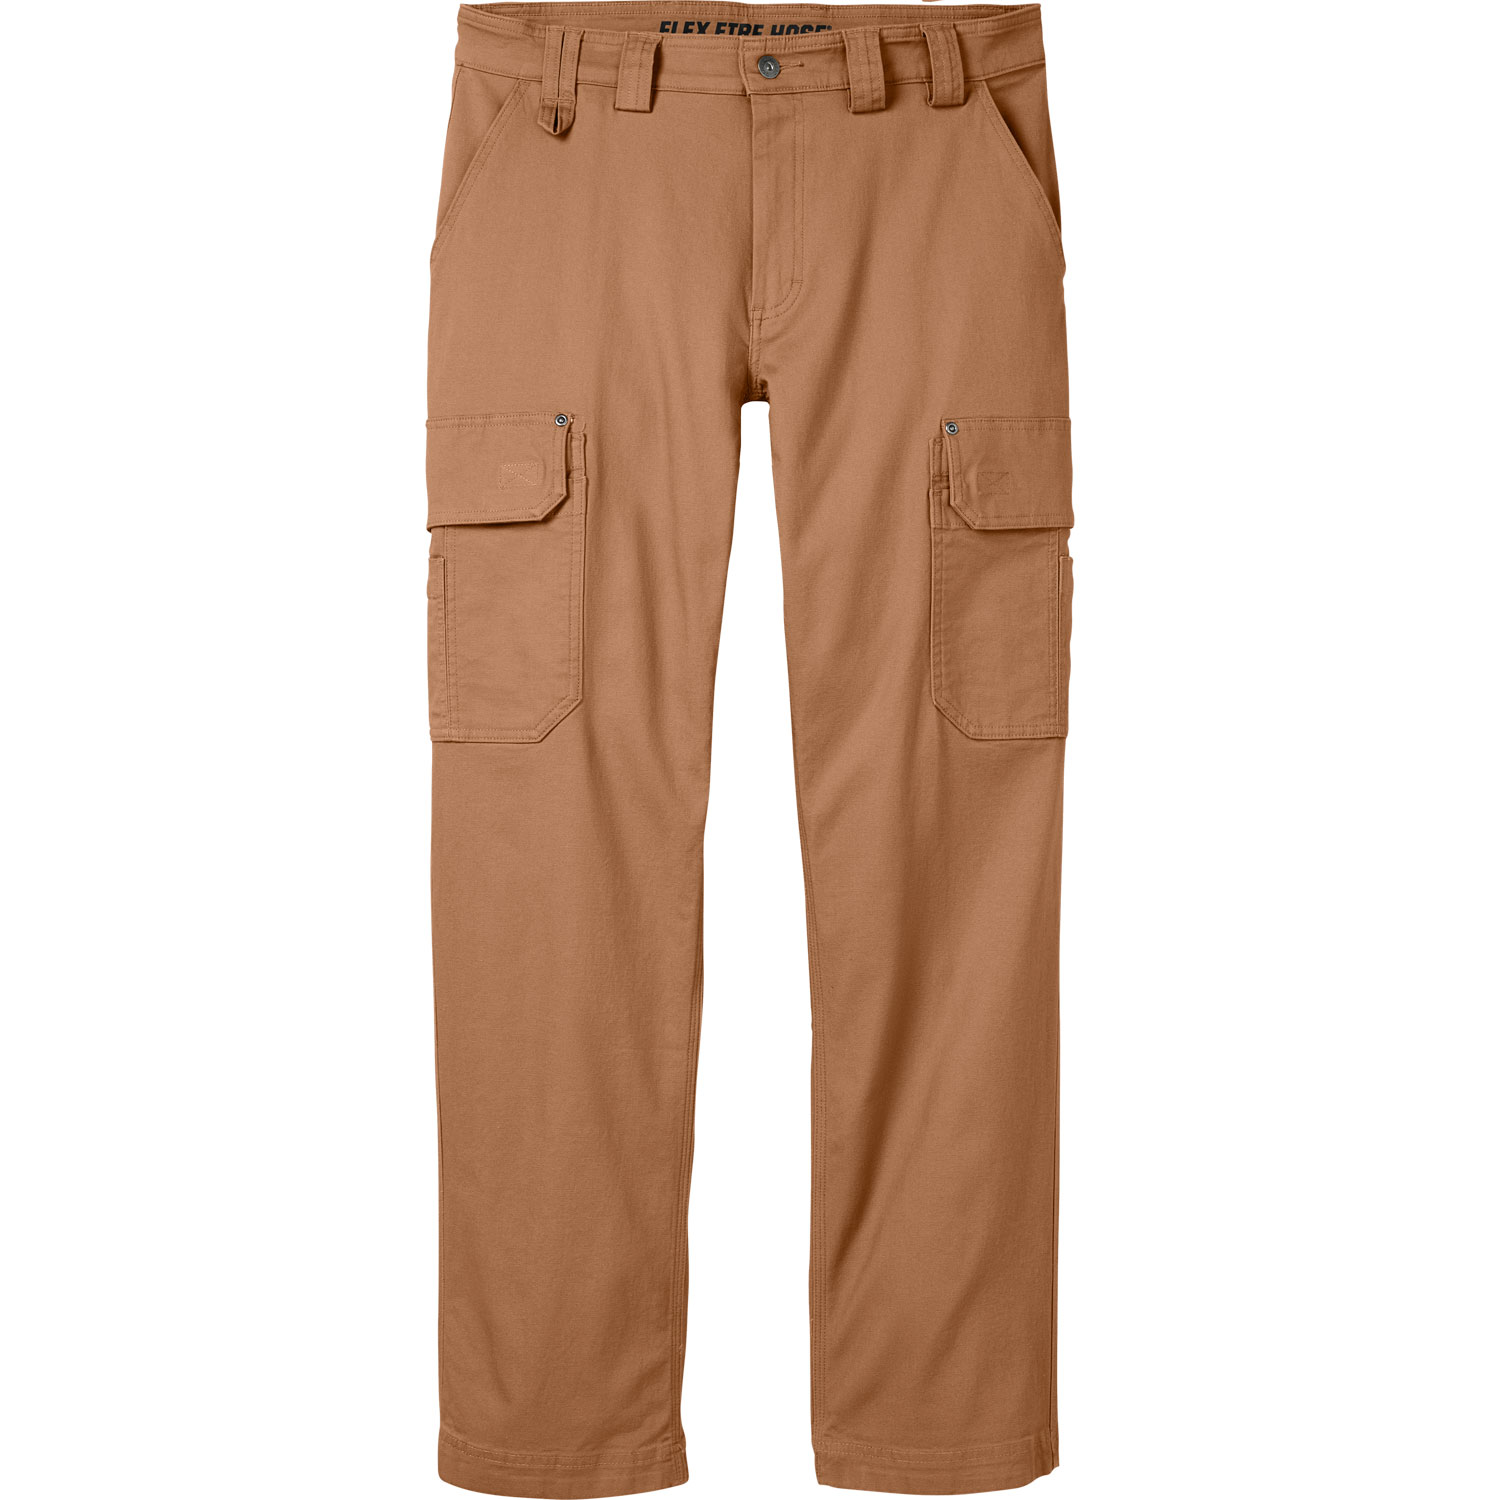 Men's DuluthFlex Fire Hose RLX Fit Cargo Work Pants - Tan/Khaki Waist-035 Duluth Trading Company